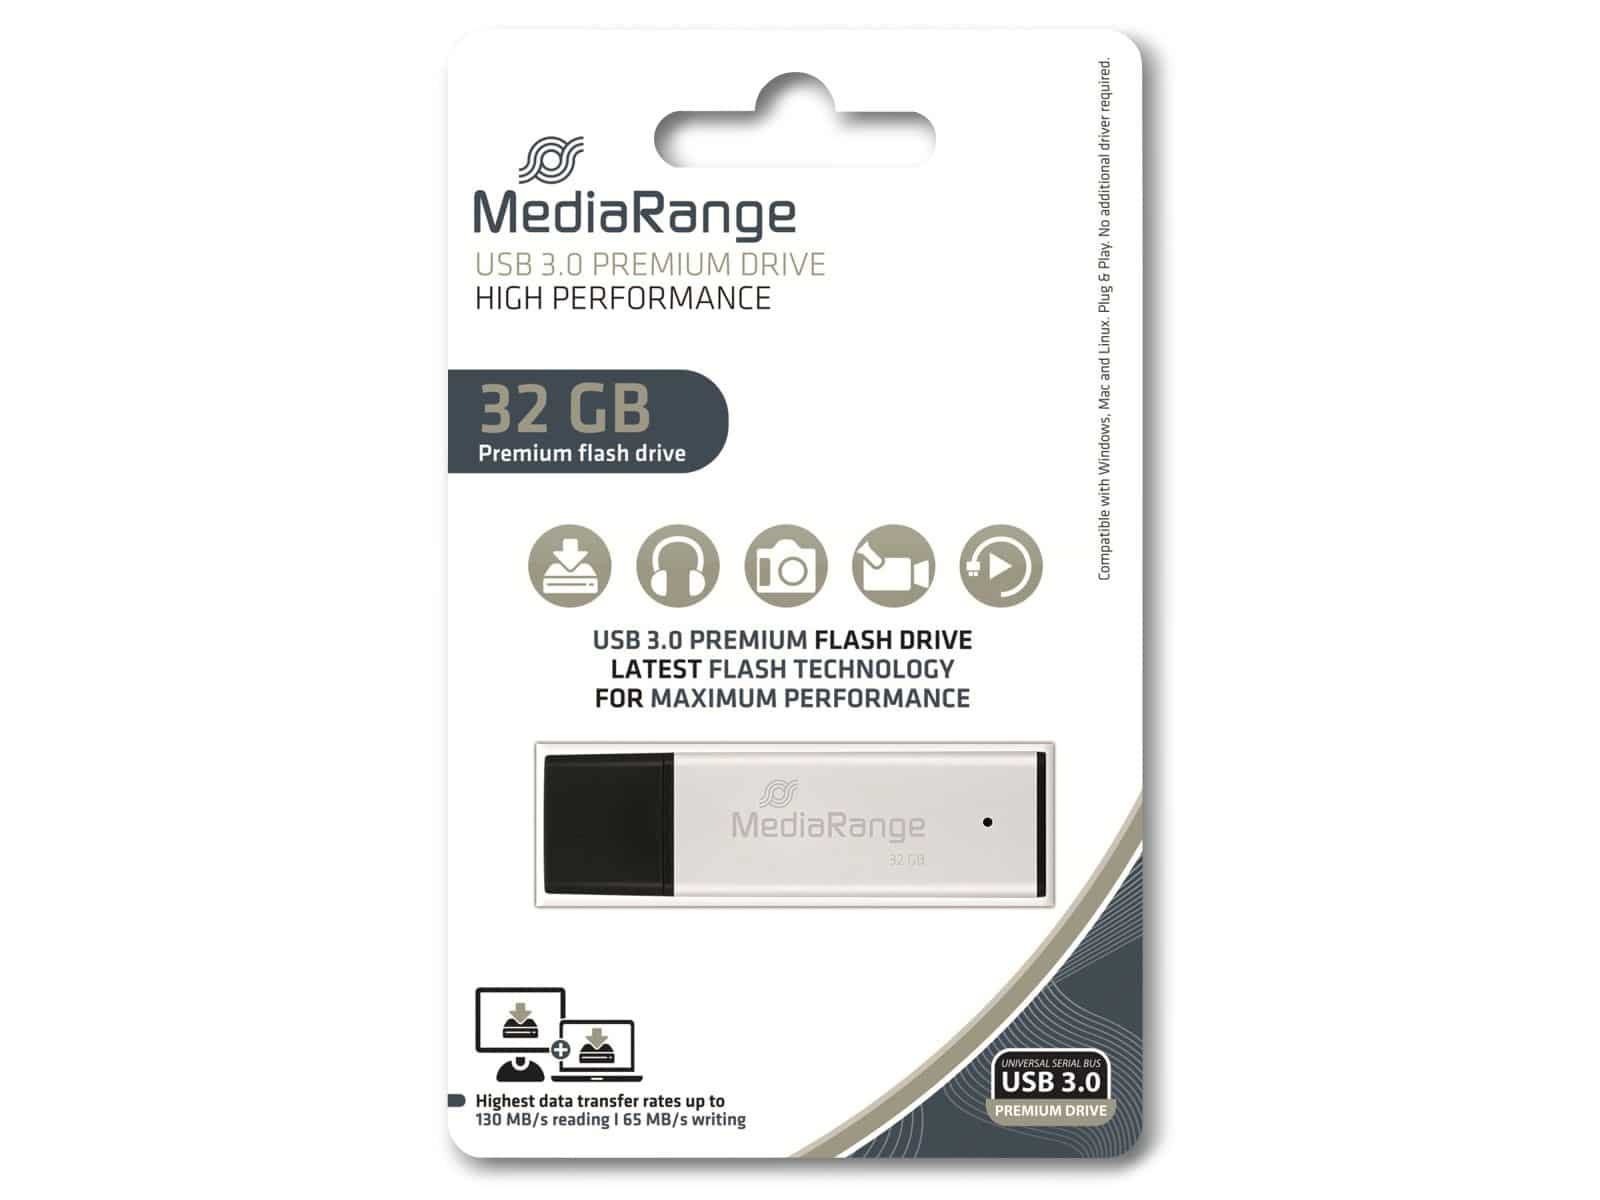 USB-Stick GB USB-Stick GB) 32 32 3.0, USB MR1900, (schwarz/silber, MEDIARANGE